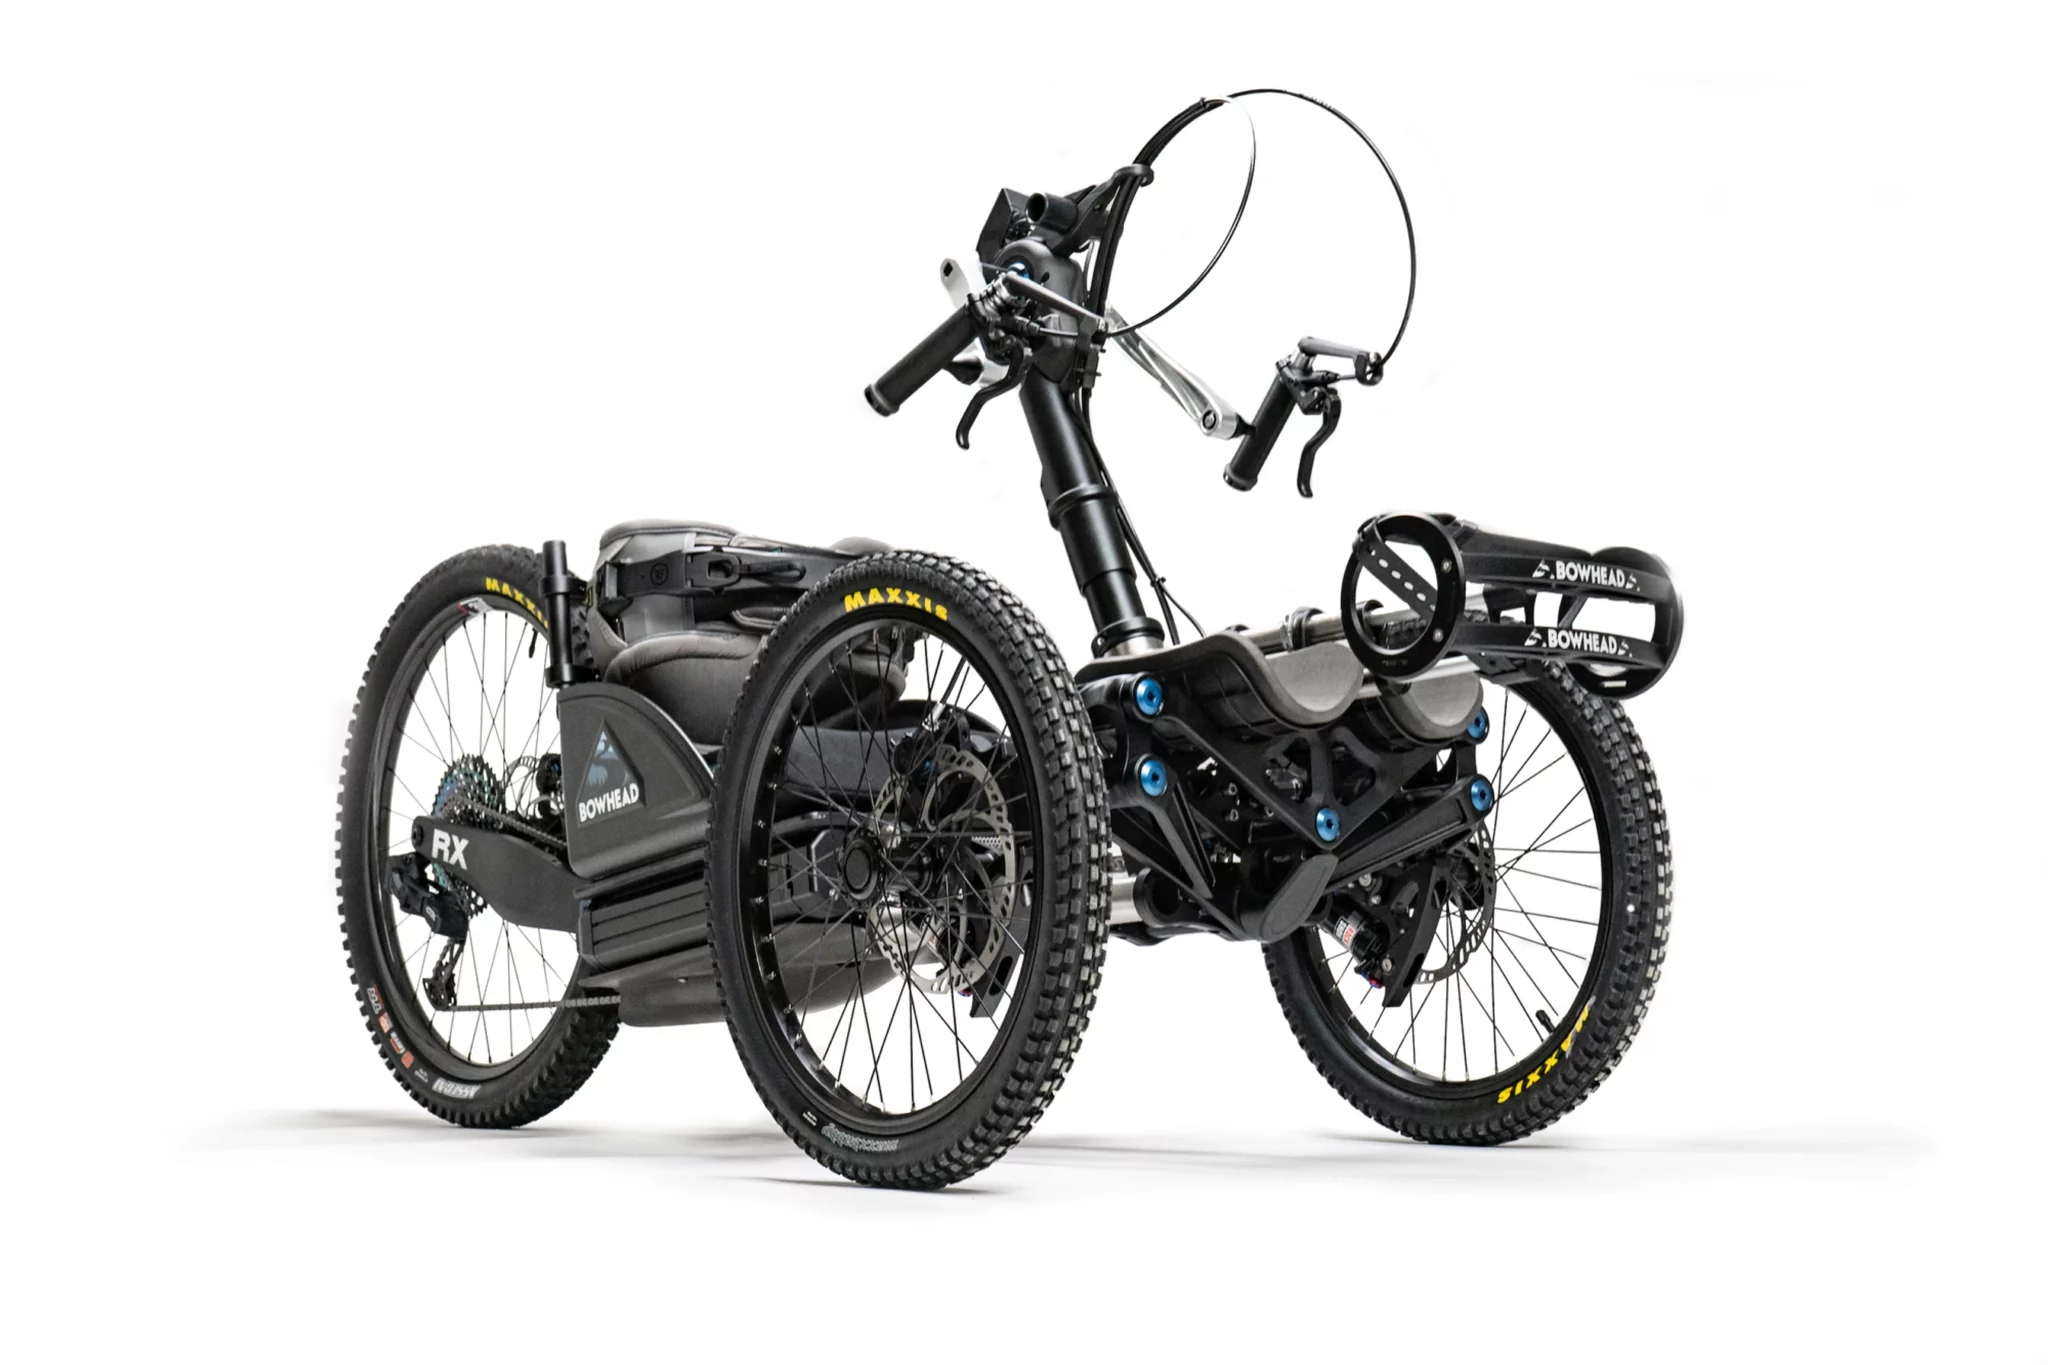 Bowhead RX E-Bike with black frame